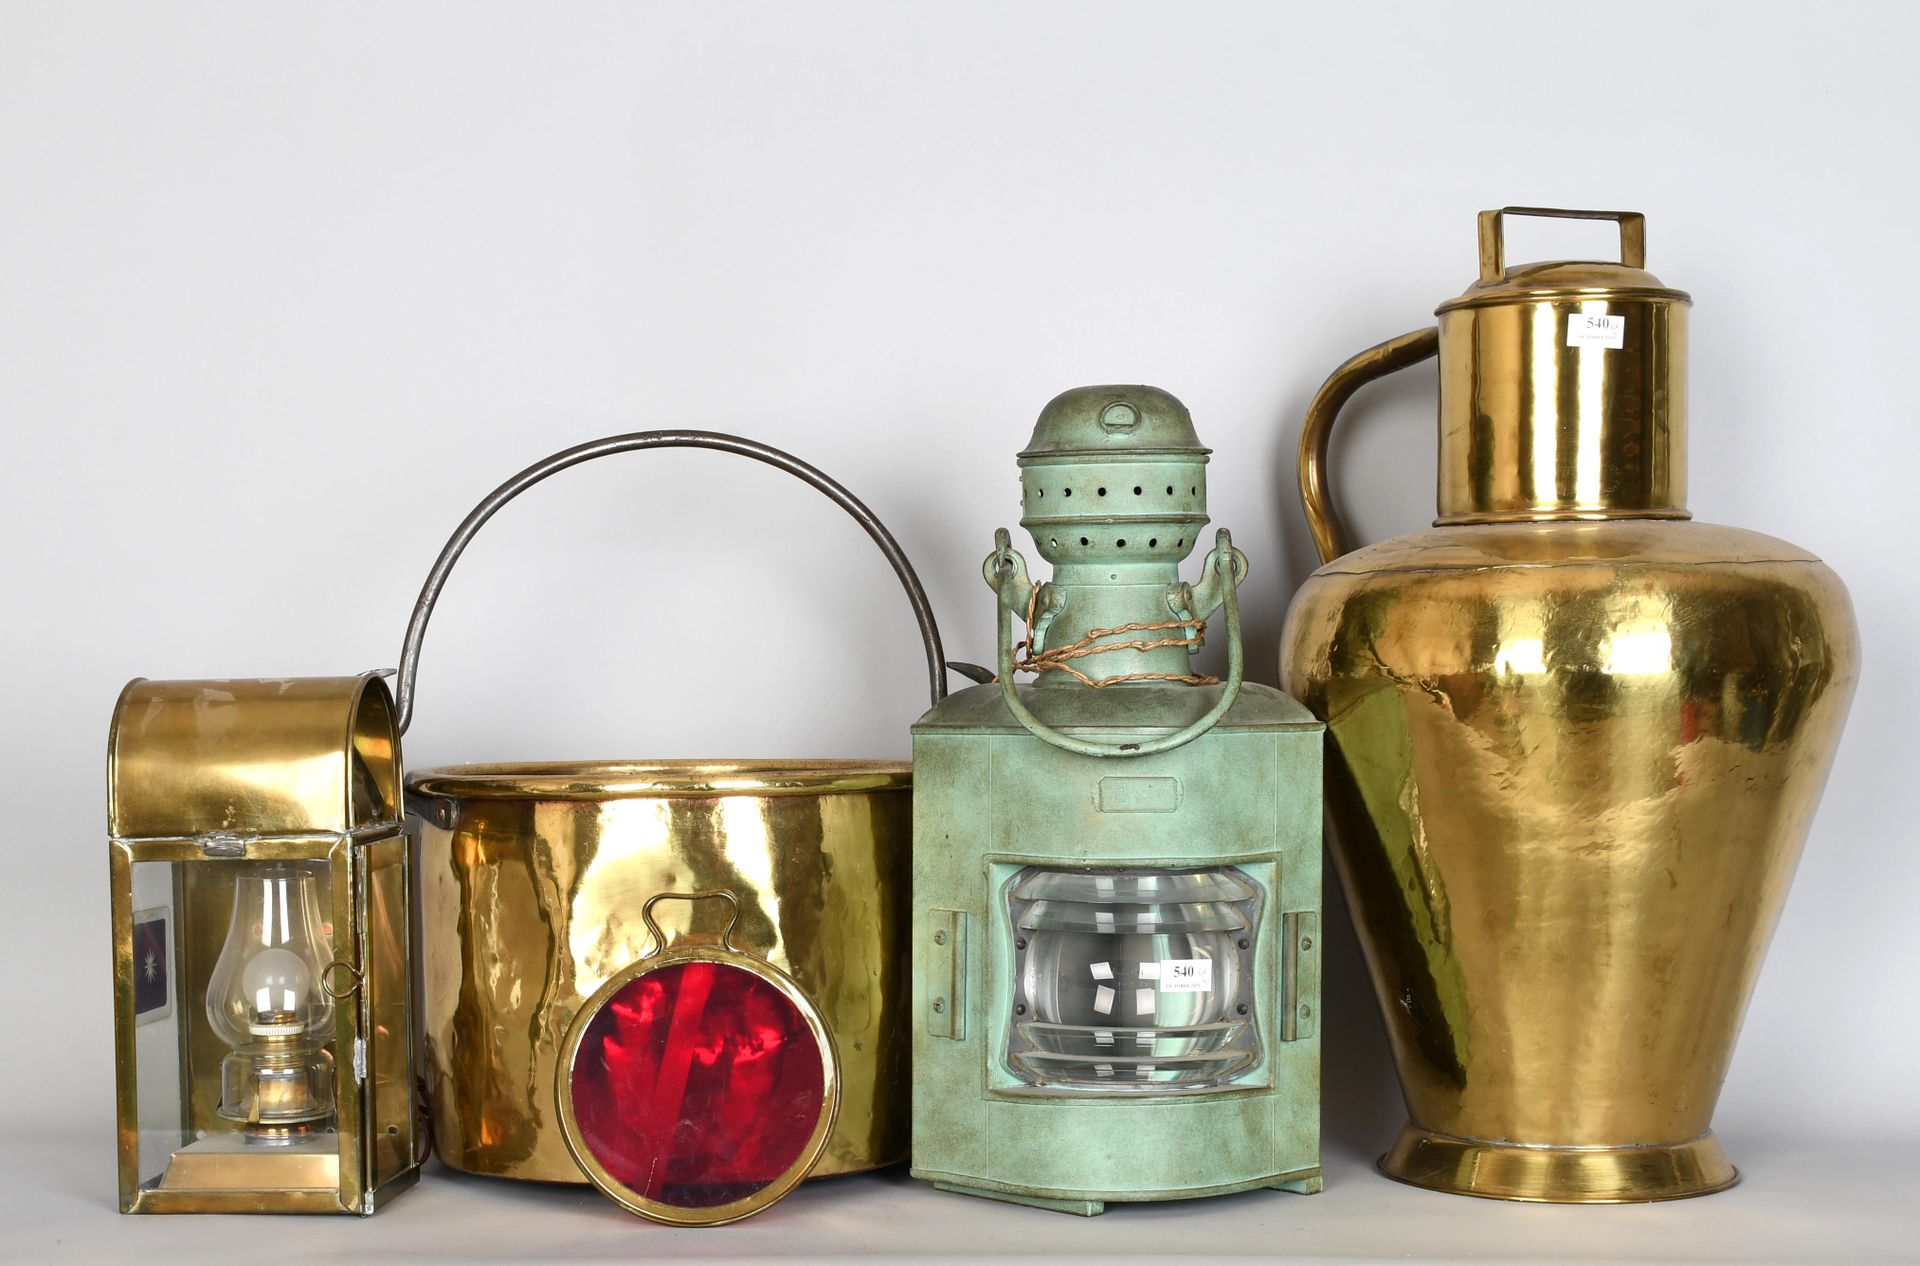 Null 各种黄铜制品

水壶、大锅和两盏旧灯。